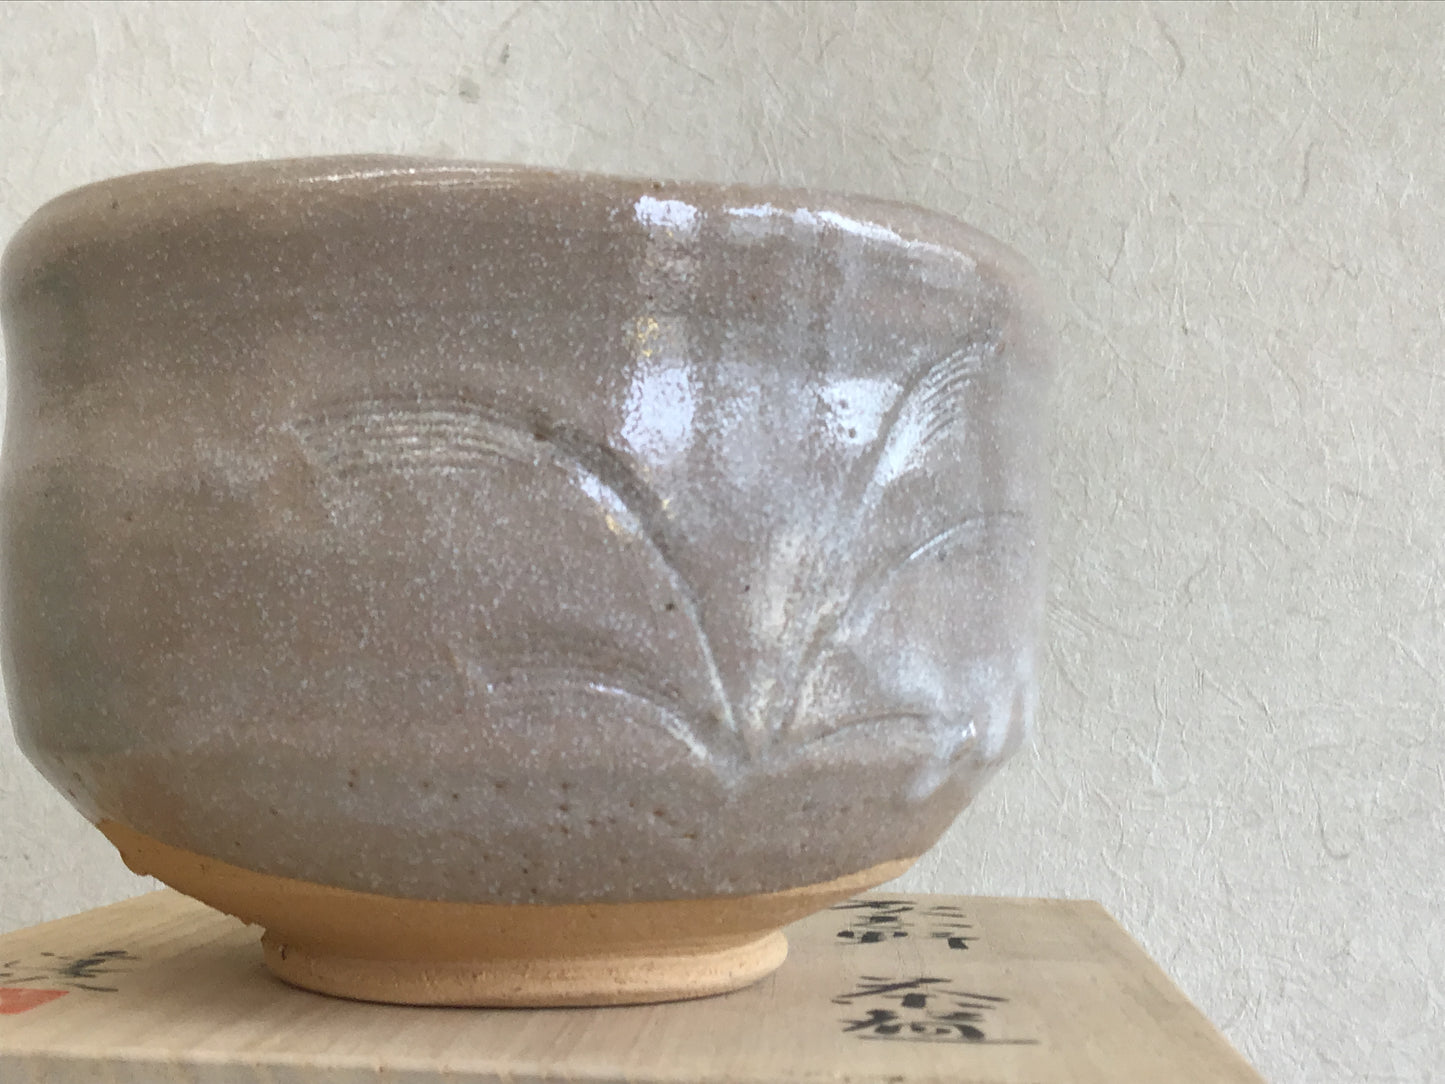 Y1233 CHAWAN Shino-ware signed box Japanese Tea Ceremony bowl pottery Japan